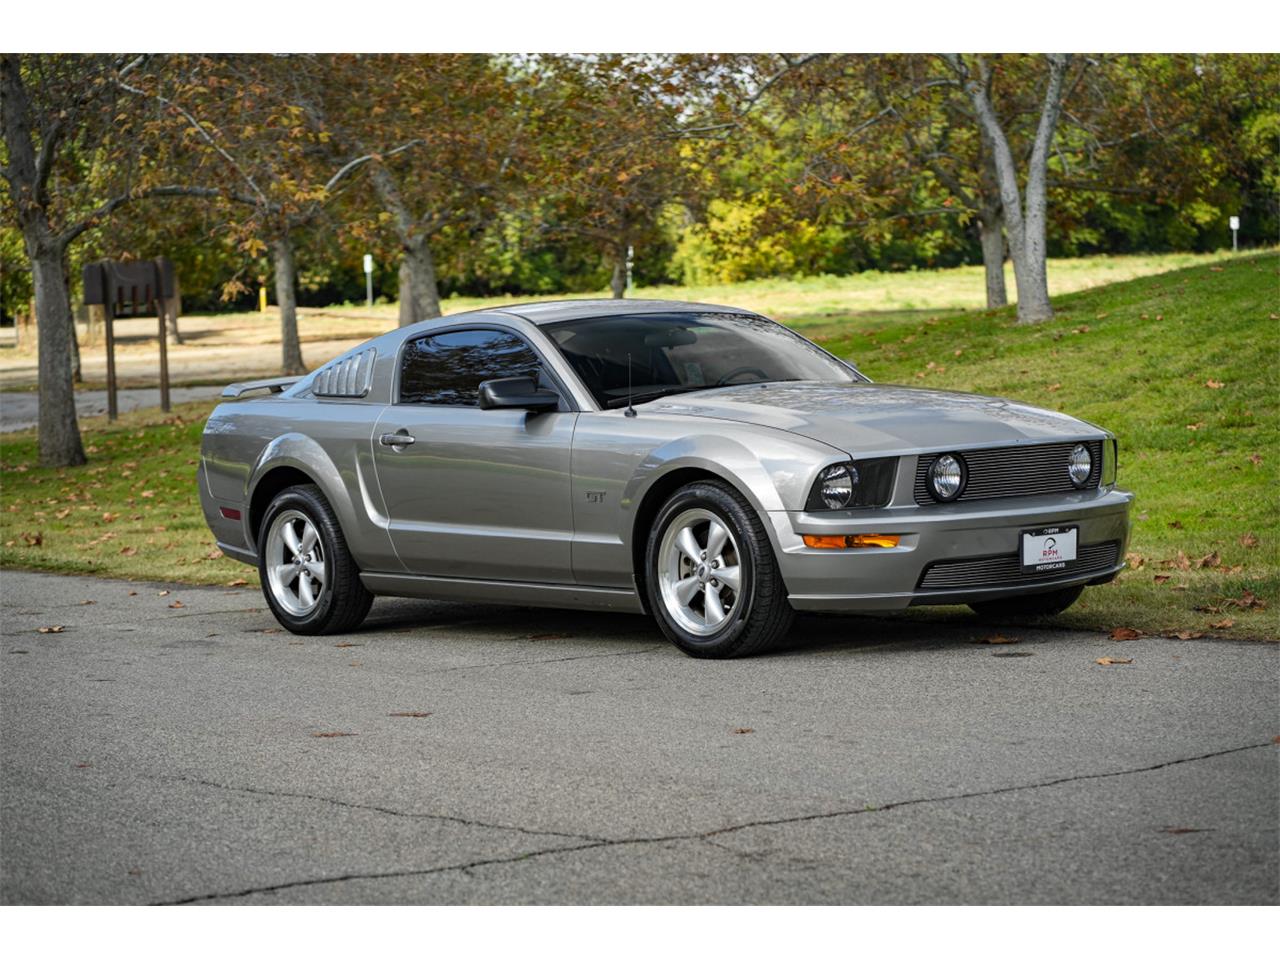 For Sale: 2008 Ford Mustang in Sherman Oaks, California for sale in Sherman Oaks, CA